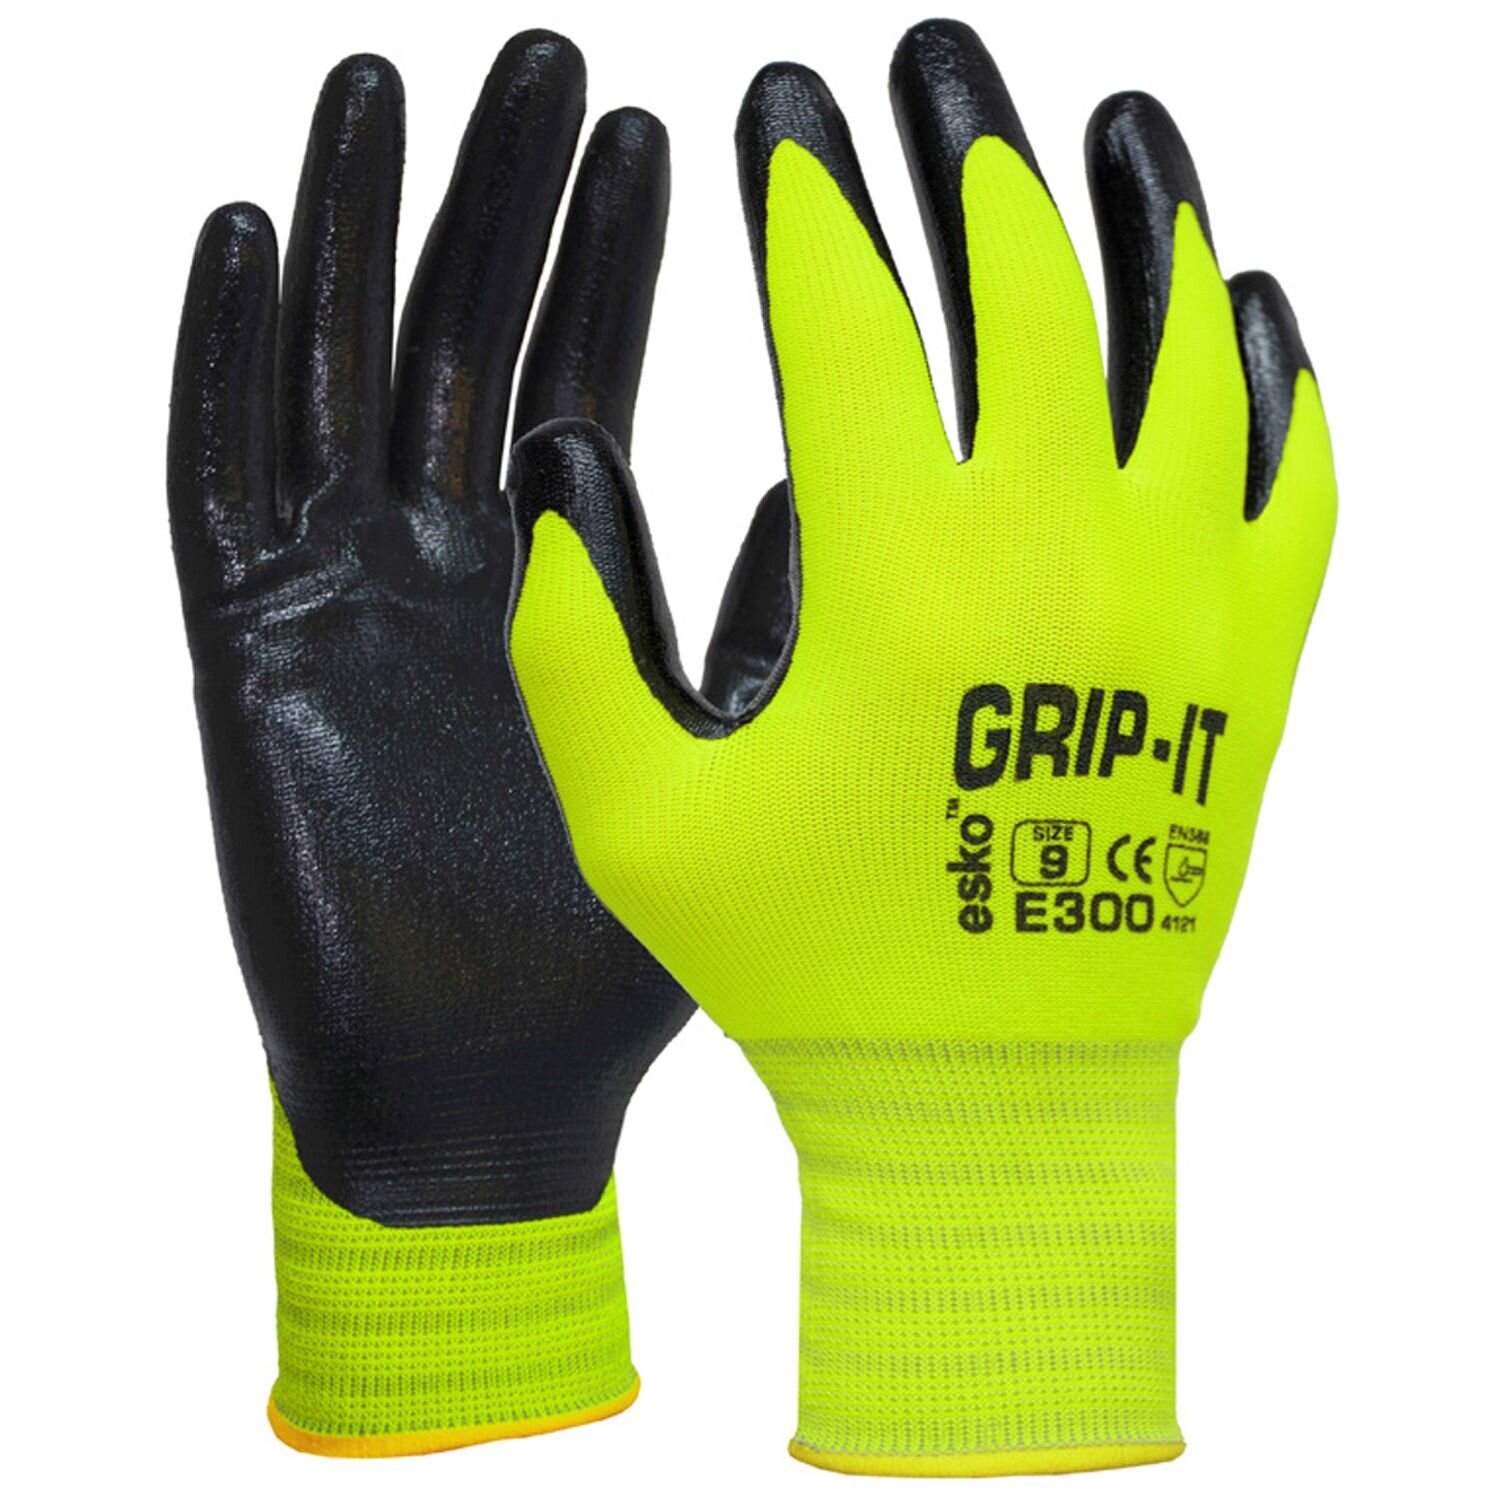 Grip It Nitrile Palm Coat Glove